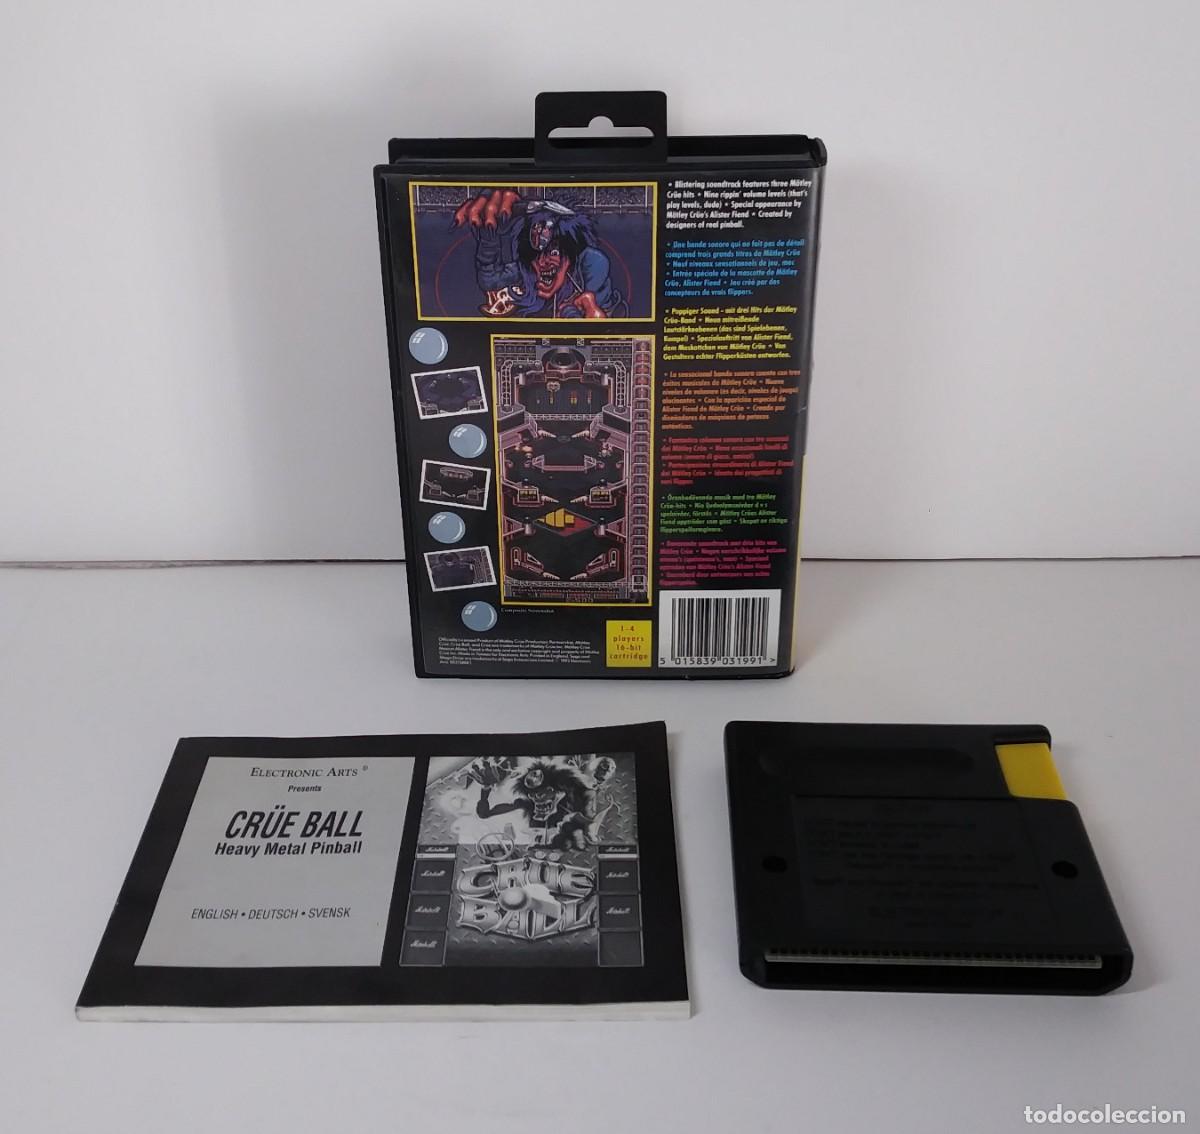 crüeball mega drive completo - Buy Video games and consoles Mega Drive on  todocoleccion